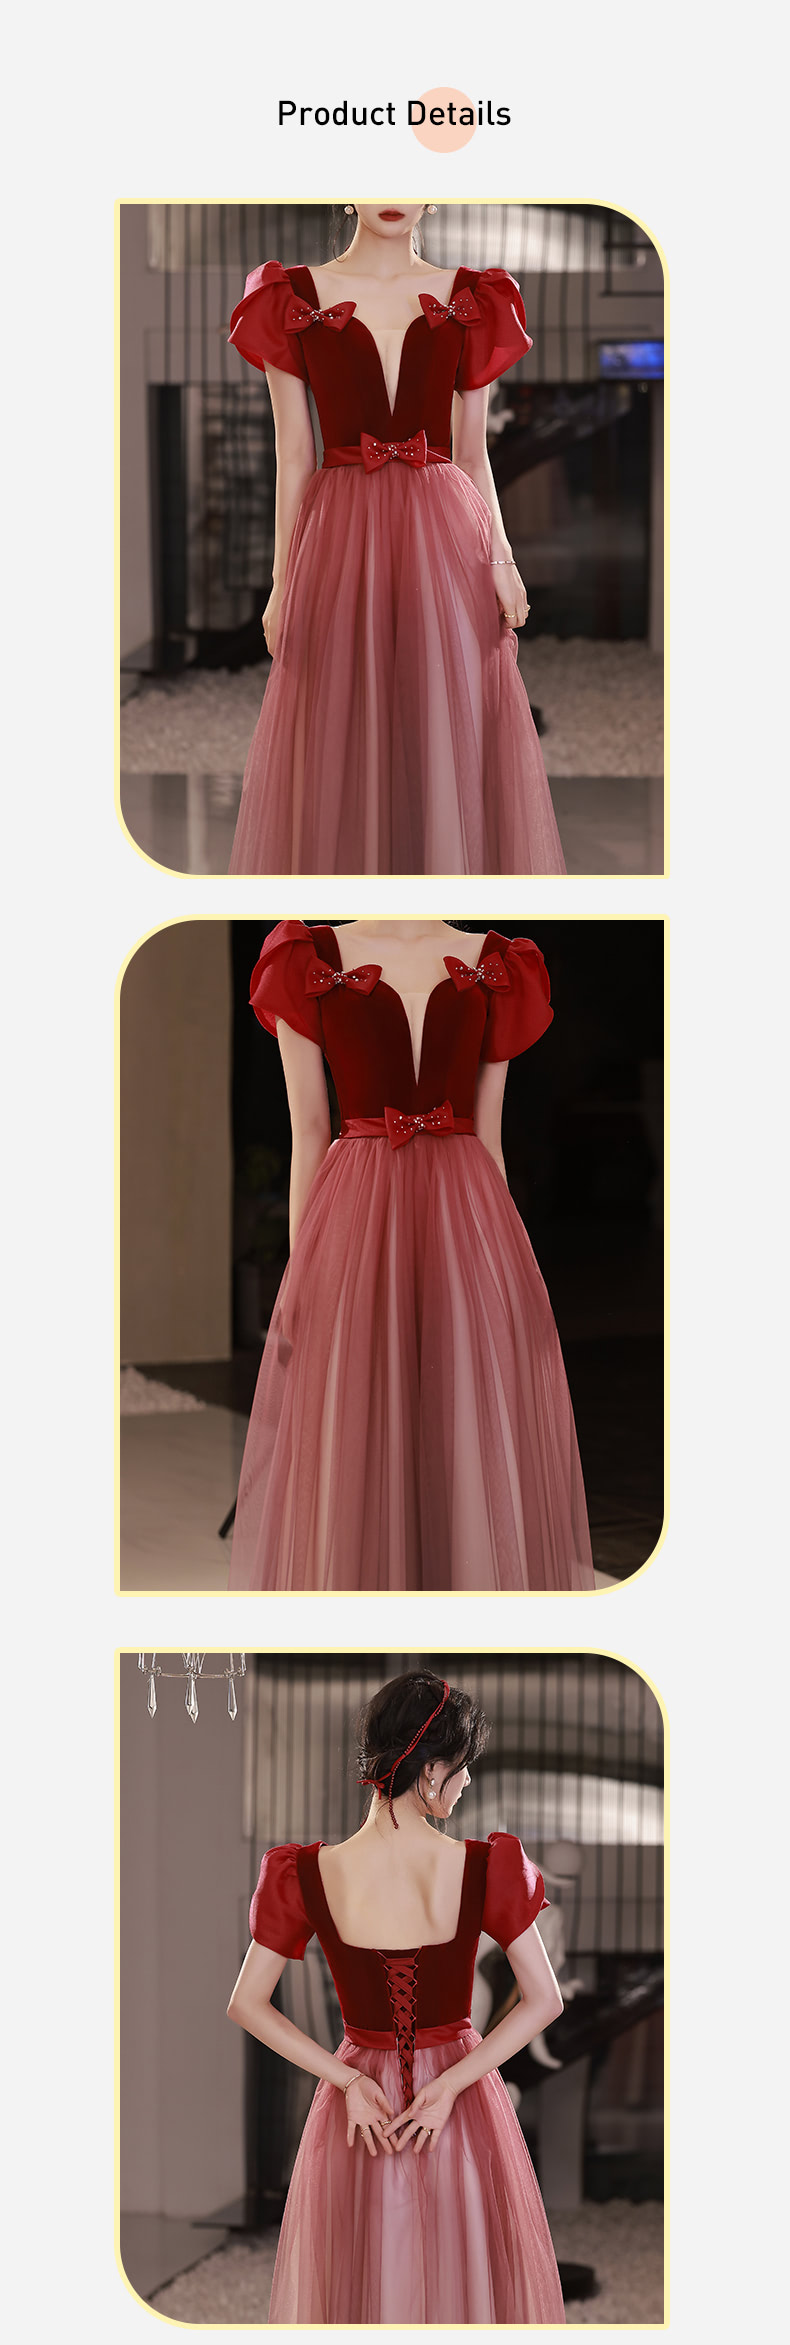 Elegant-Hepburn-Style-Burgundy-Party-Prom-Dress-Evening-Gown10.jpg